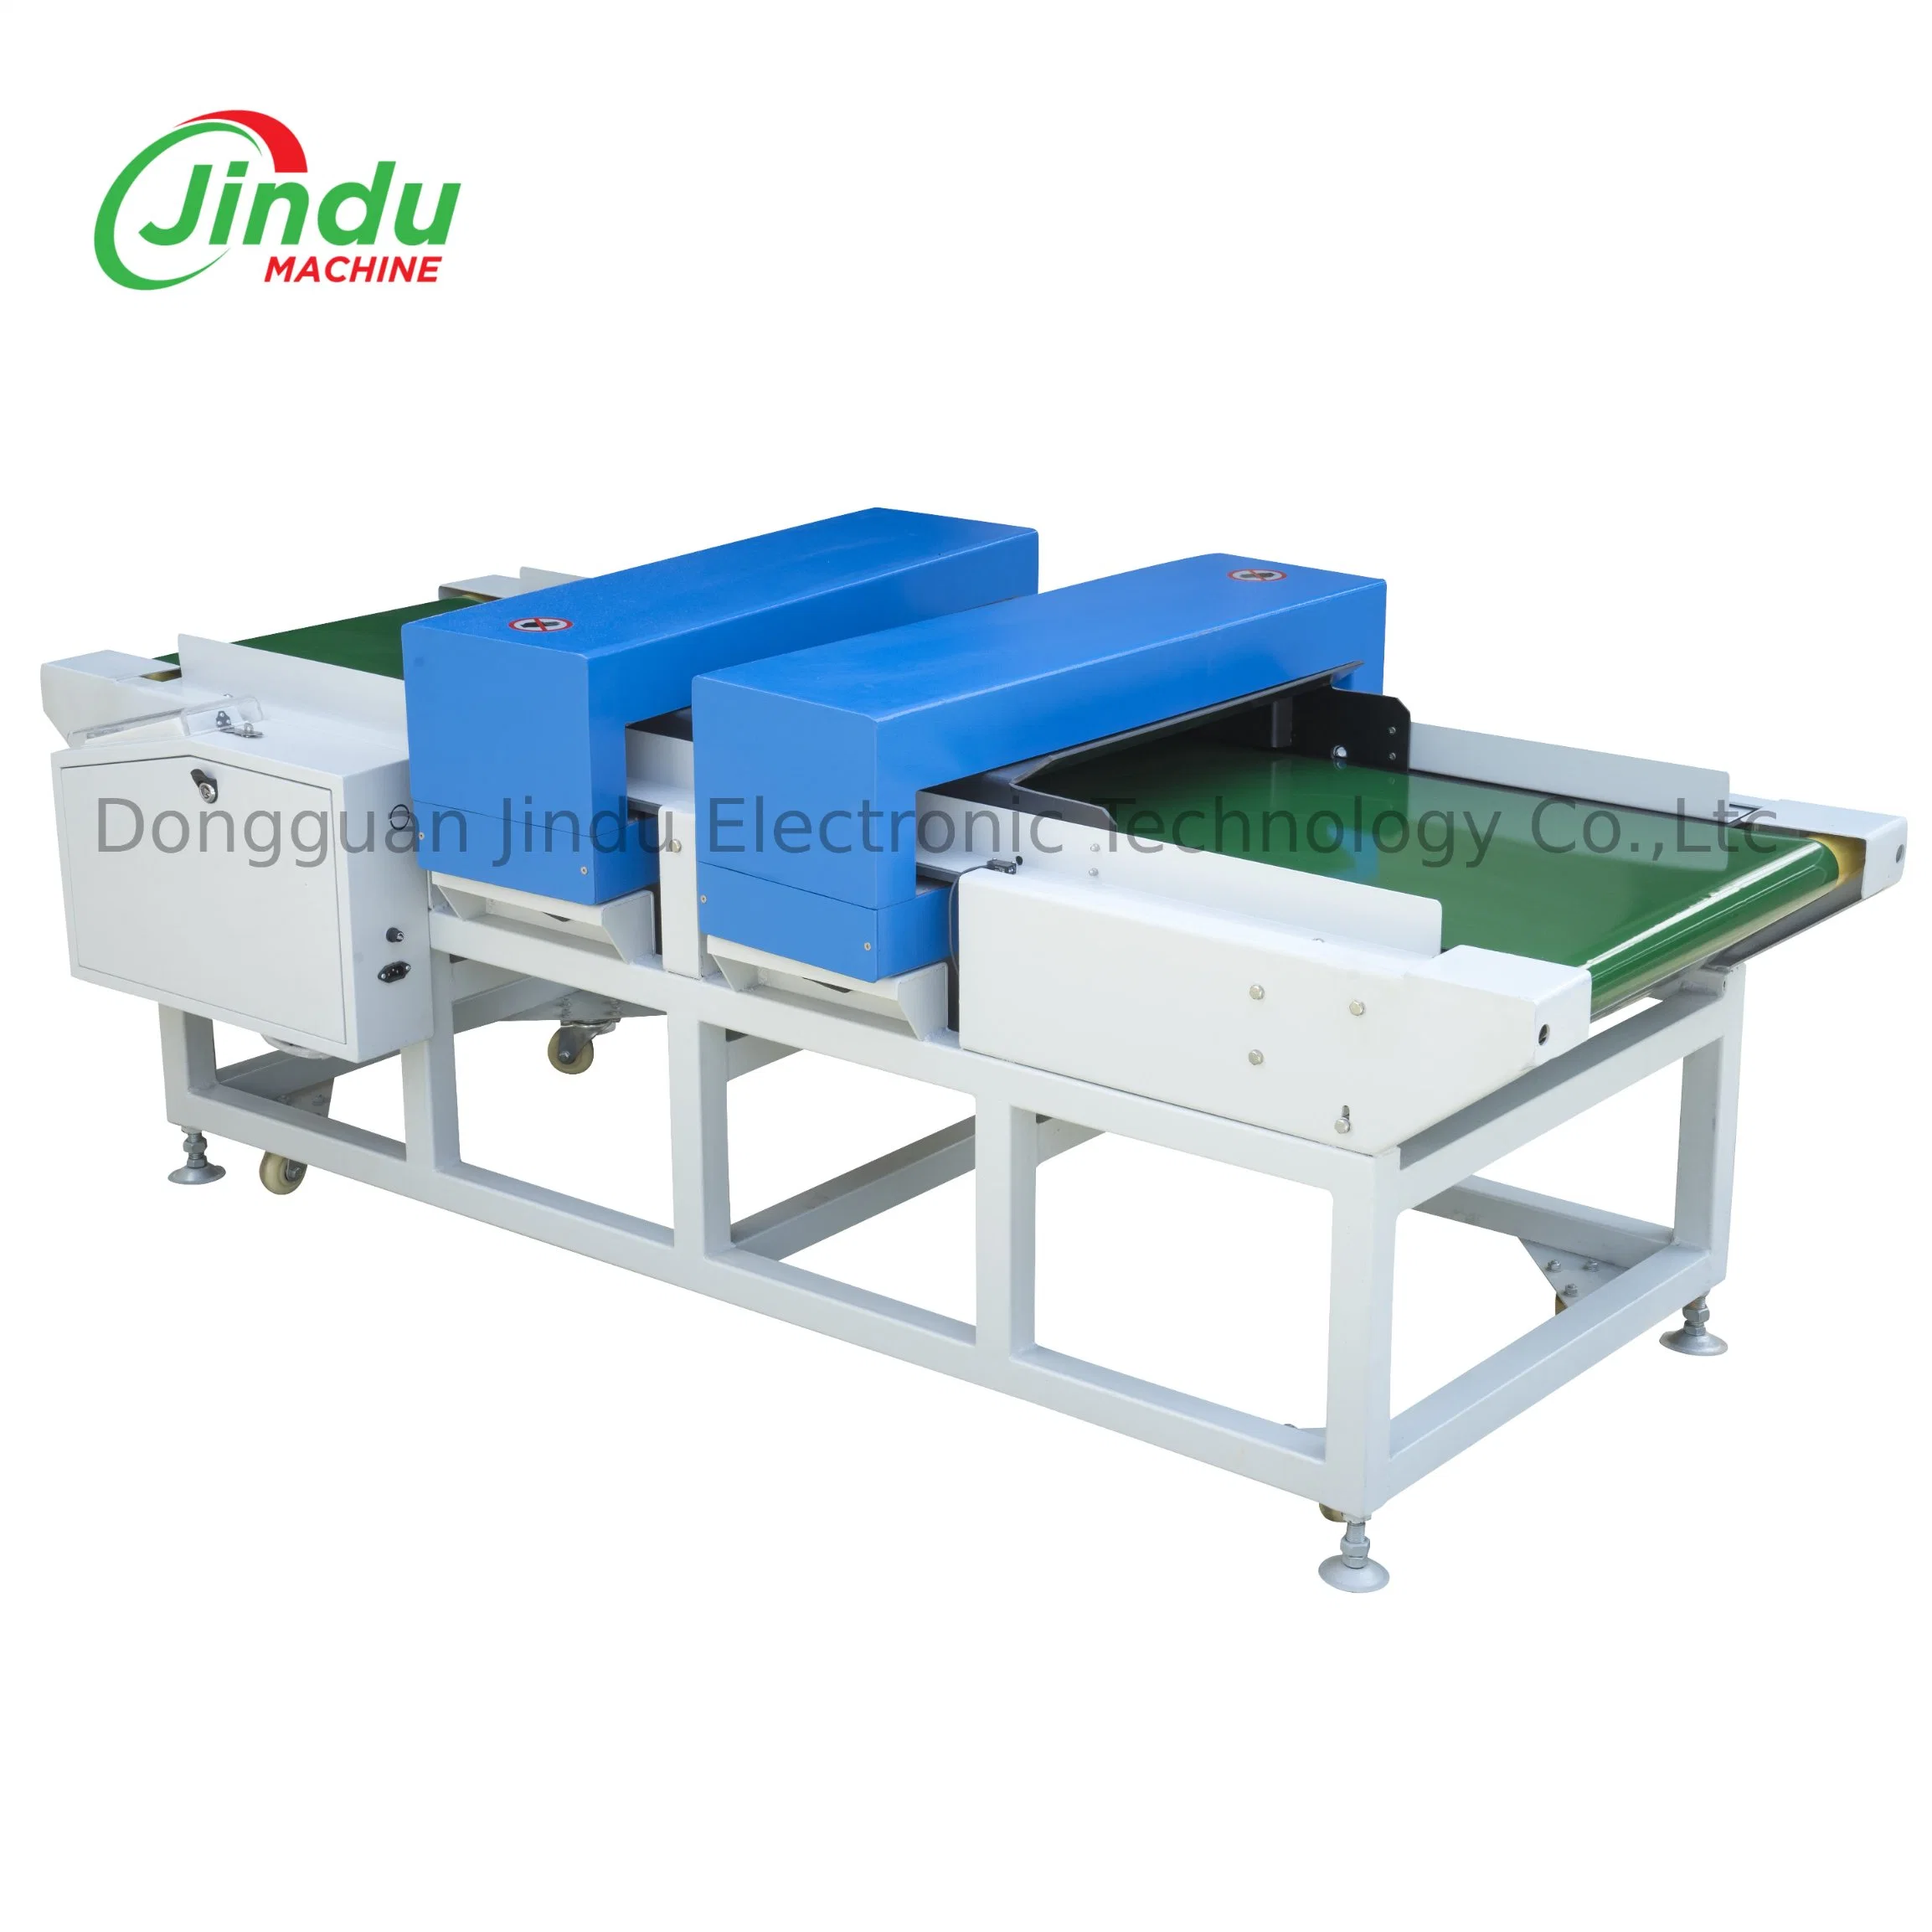 05 Jindu Machine for Needle Detector Machine Metal Apparel Garment Industry Conveyor Belt Textile